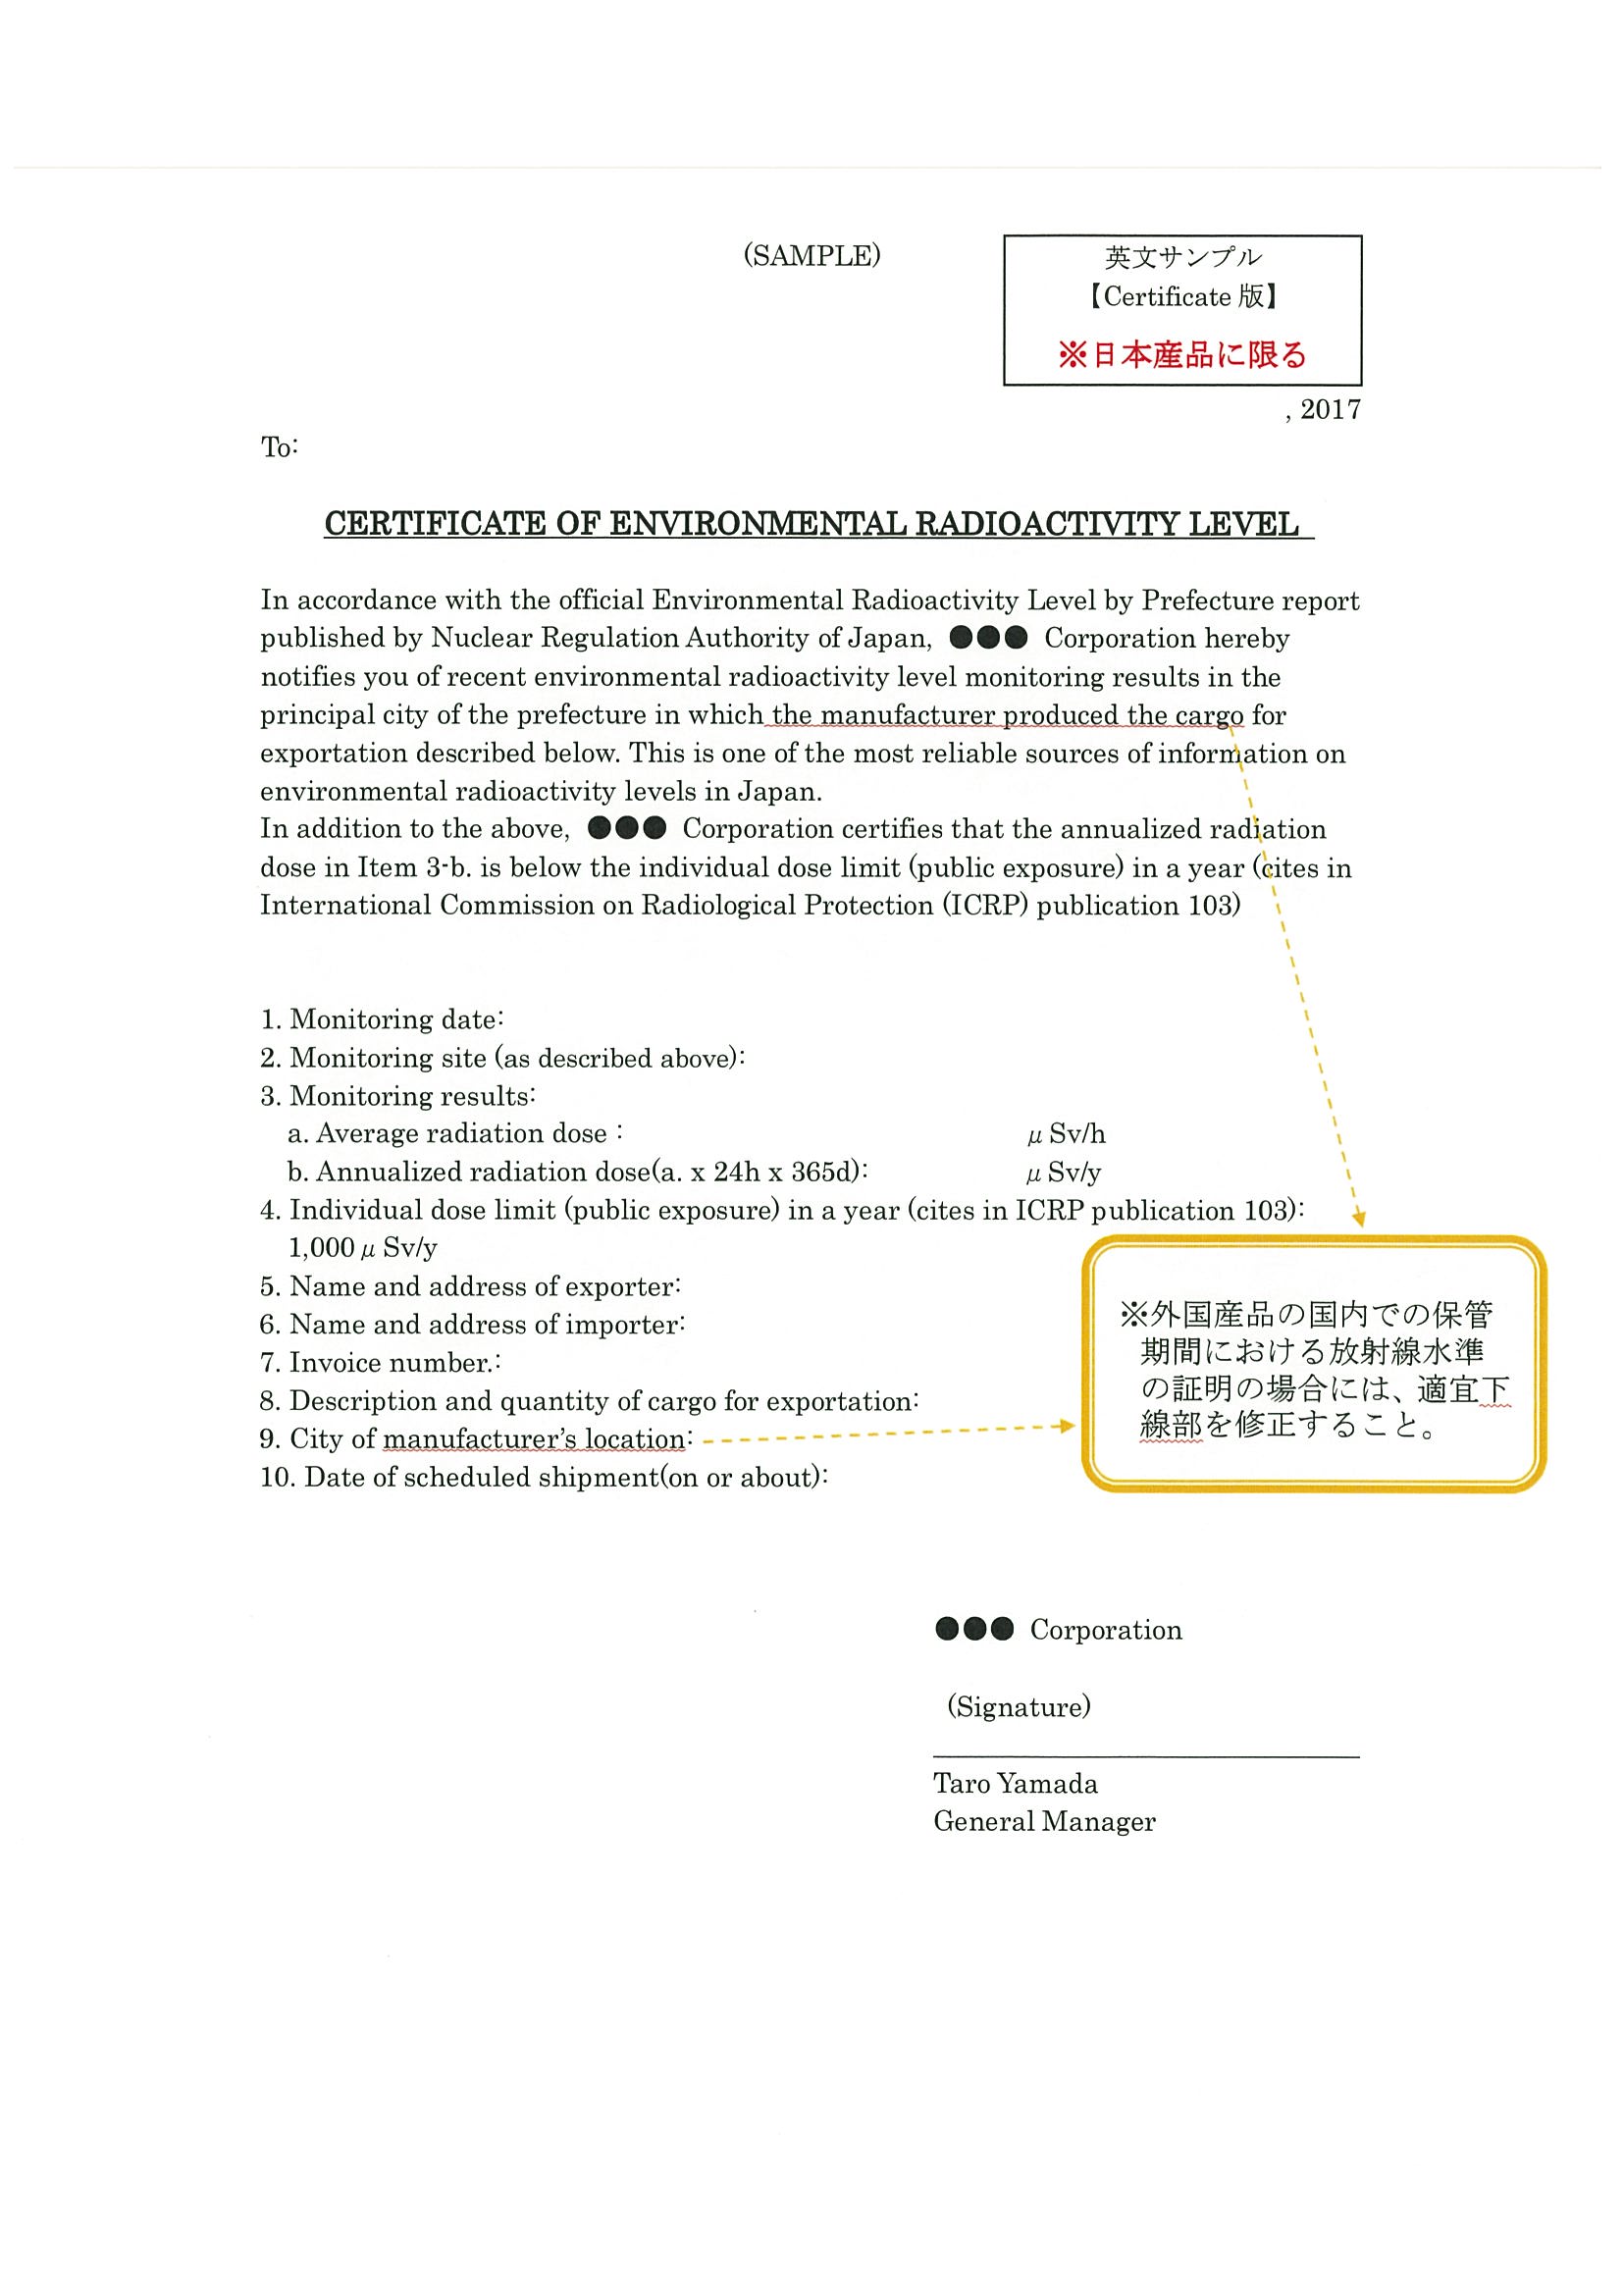 9. Certificate of environmental radioactivity level（環境放射能水準に係る証明）